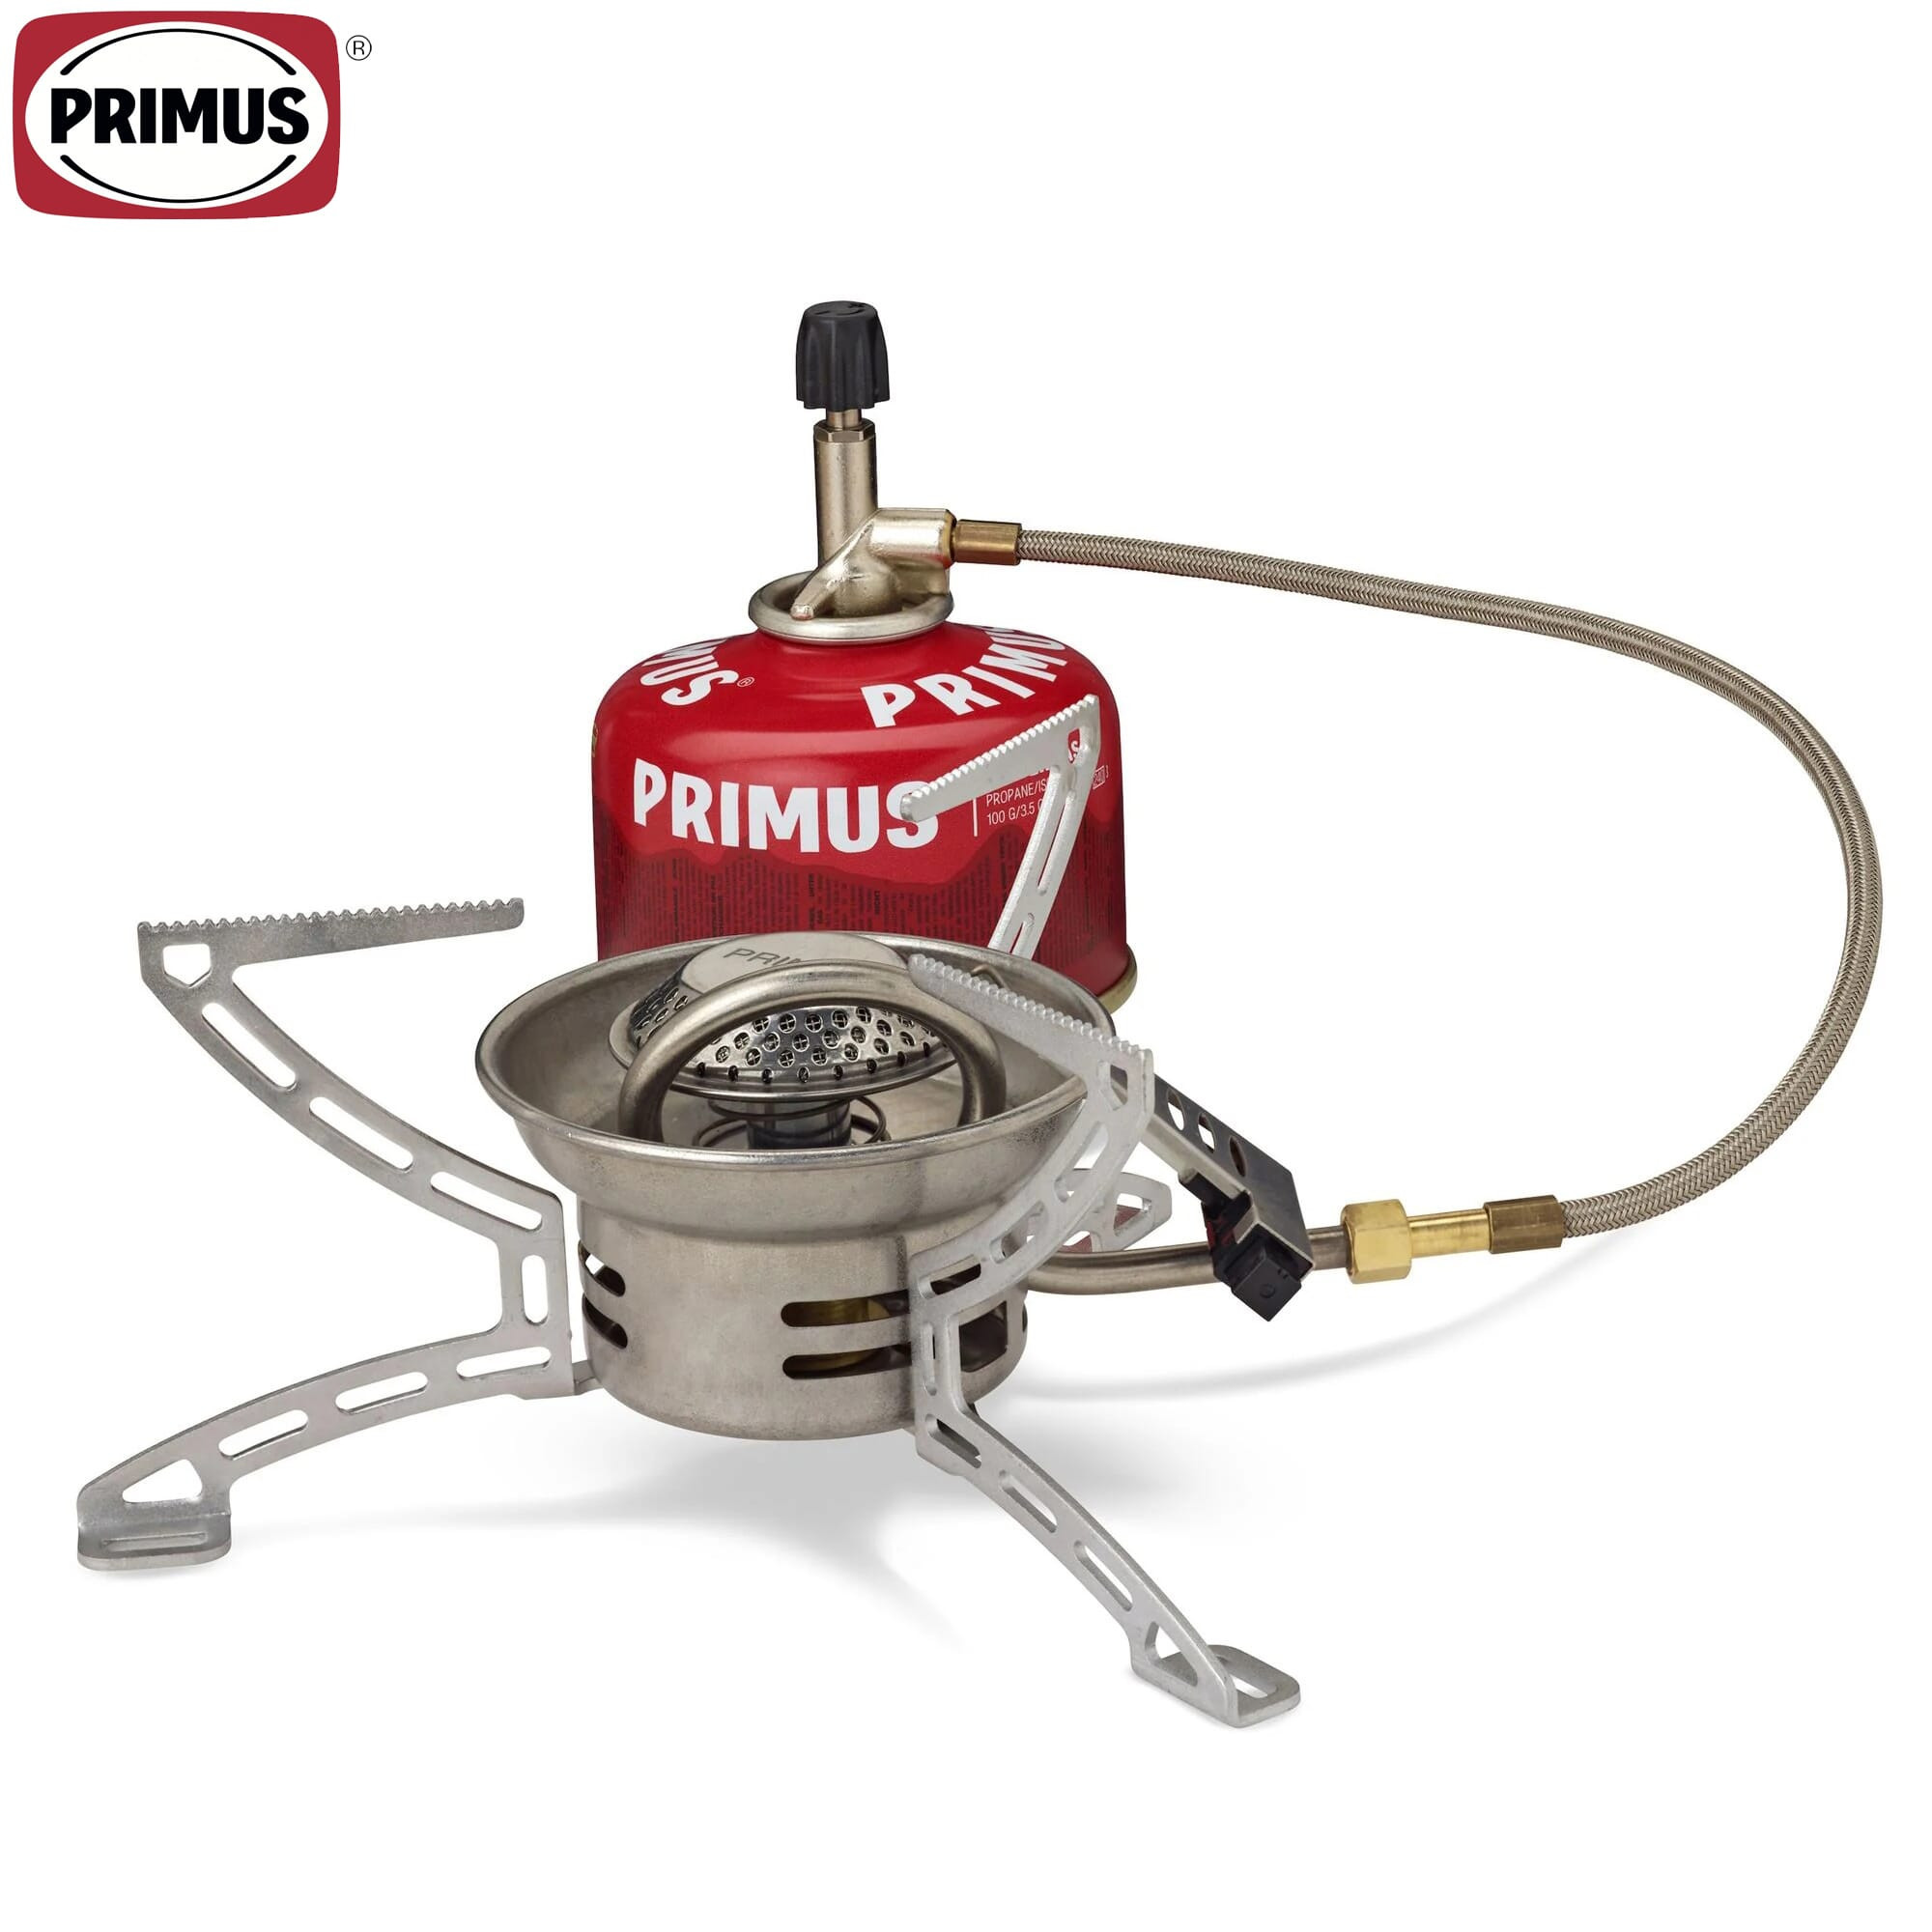 Primus Easy Fuel II Gas Stove